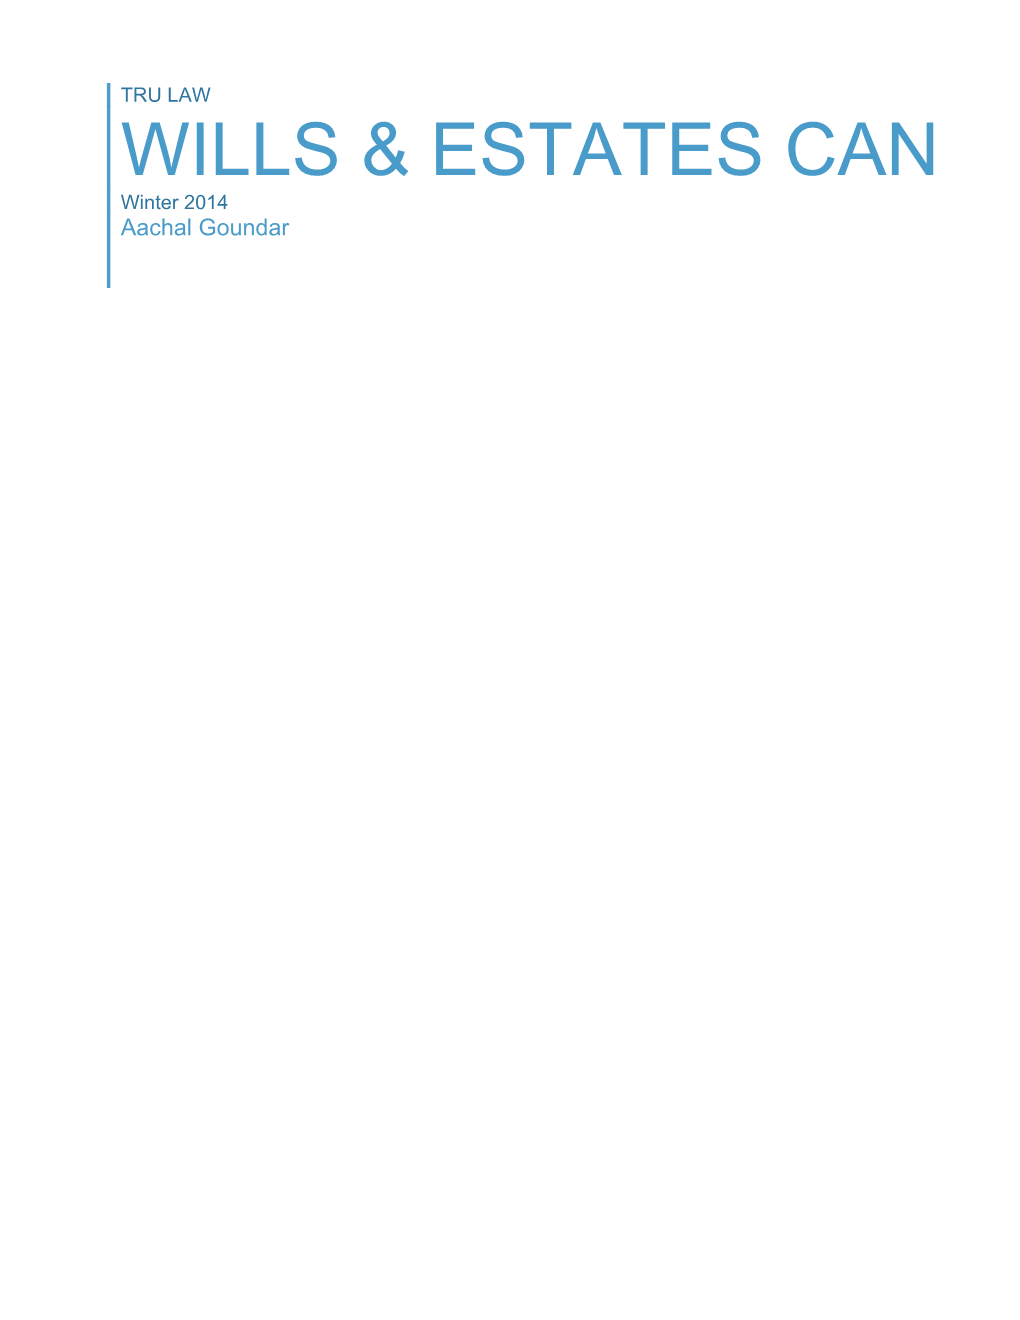 Wills & Estates Can